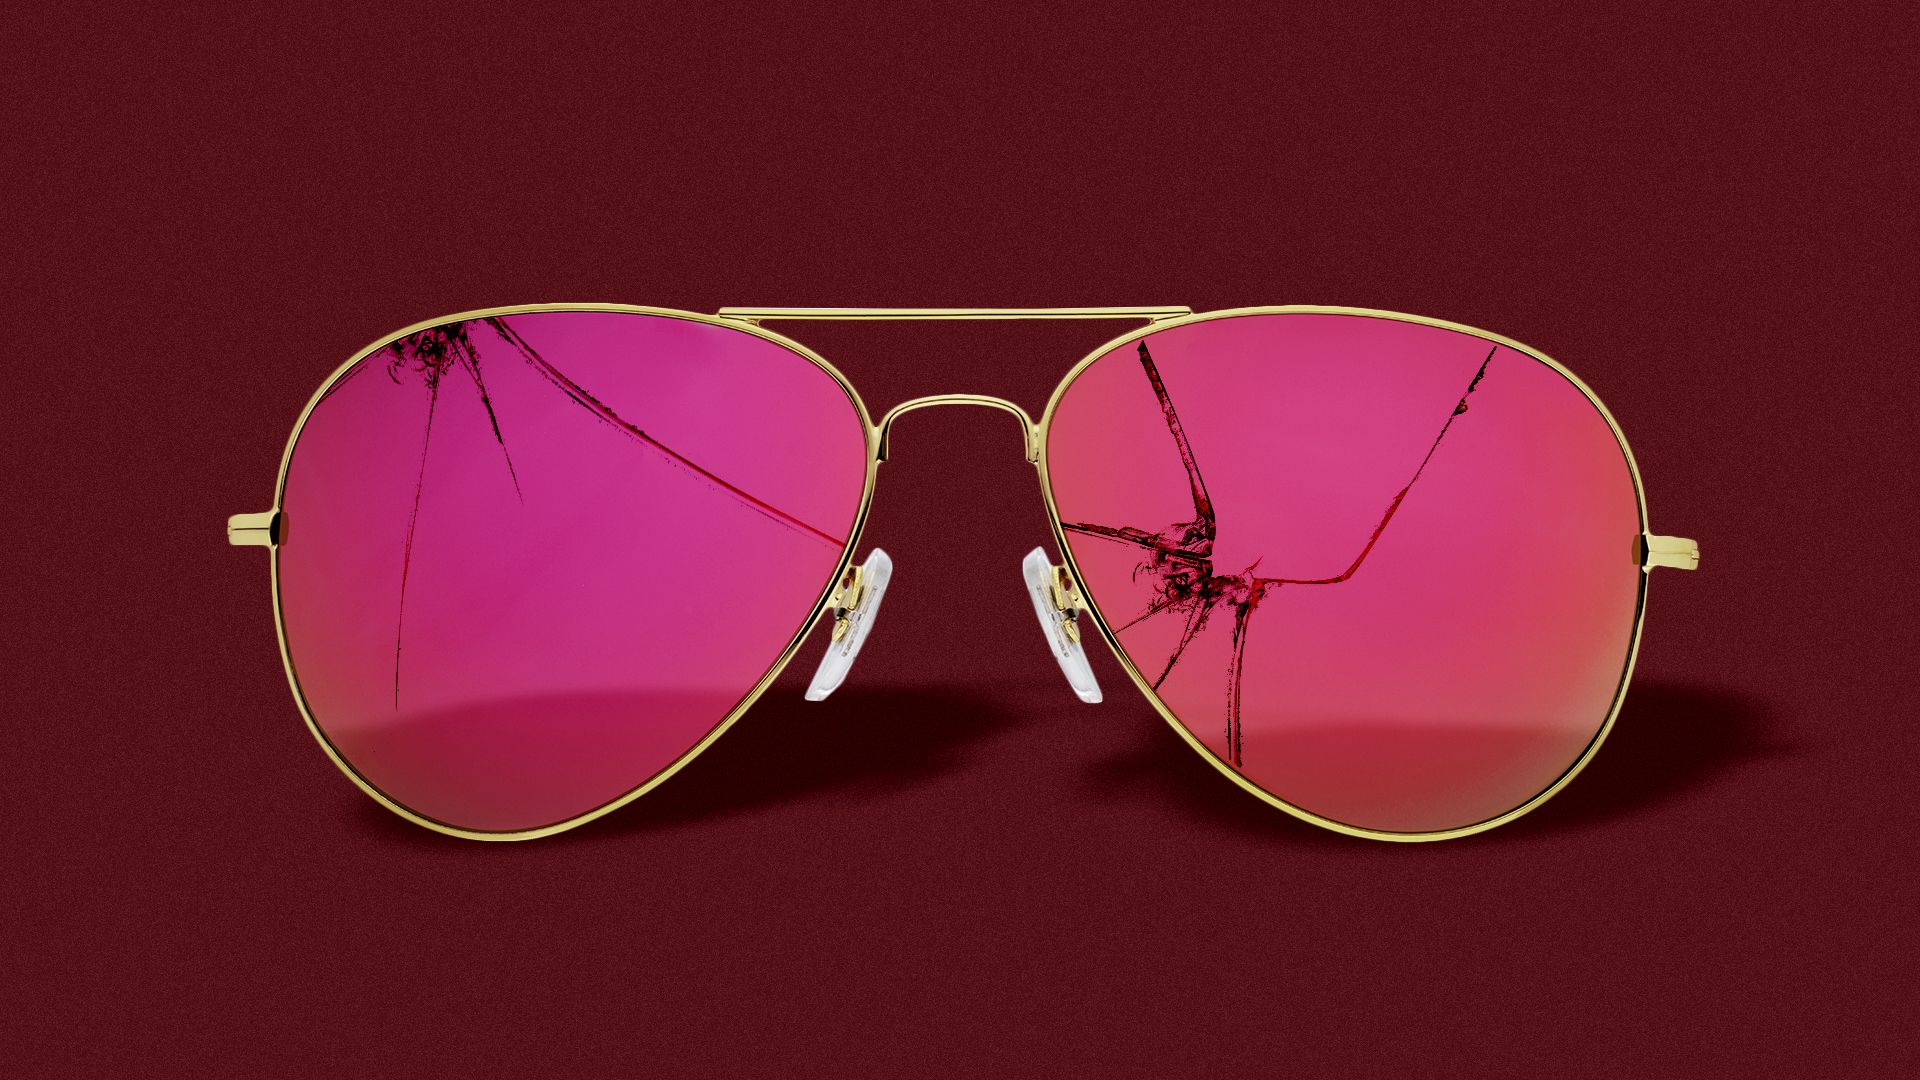 Illustration of cracked rose-colored aviator sunglasses